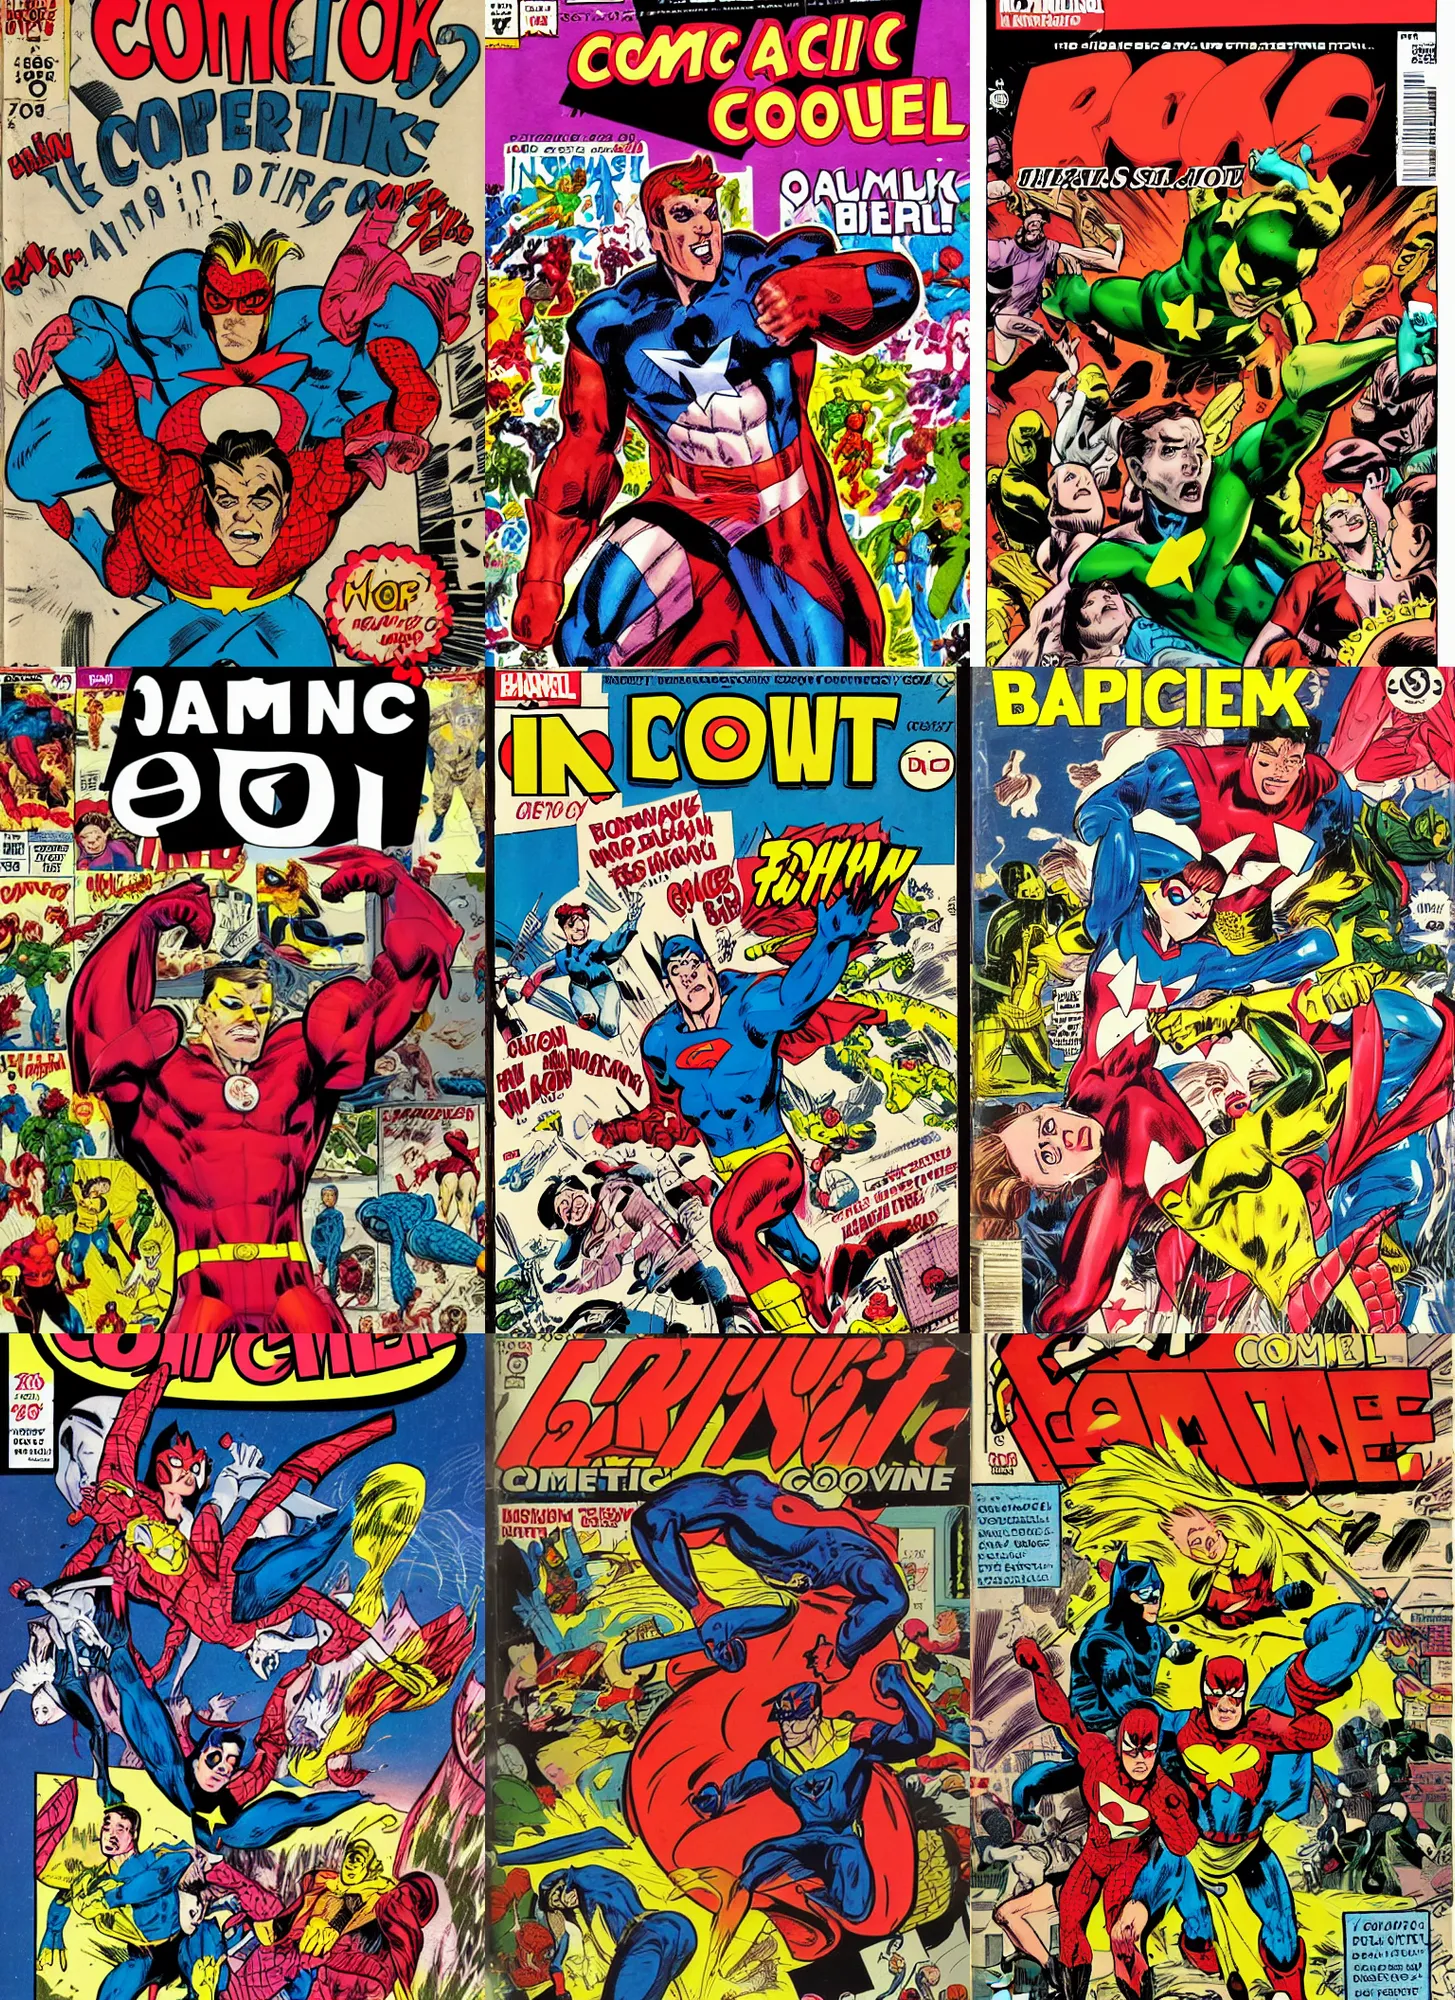 Prompt: comic book cover